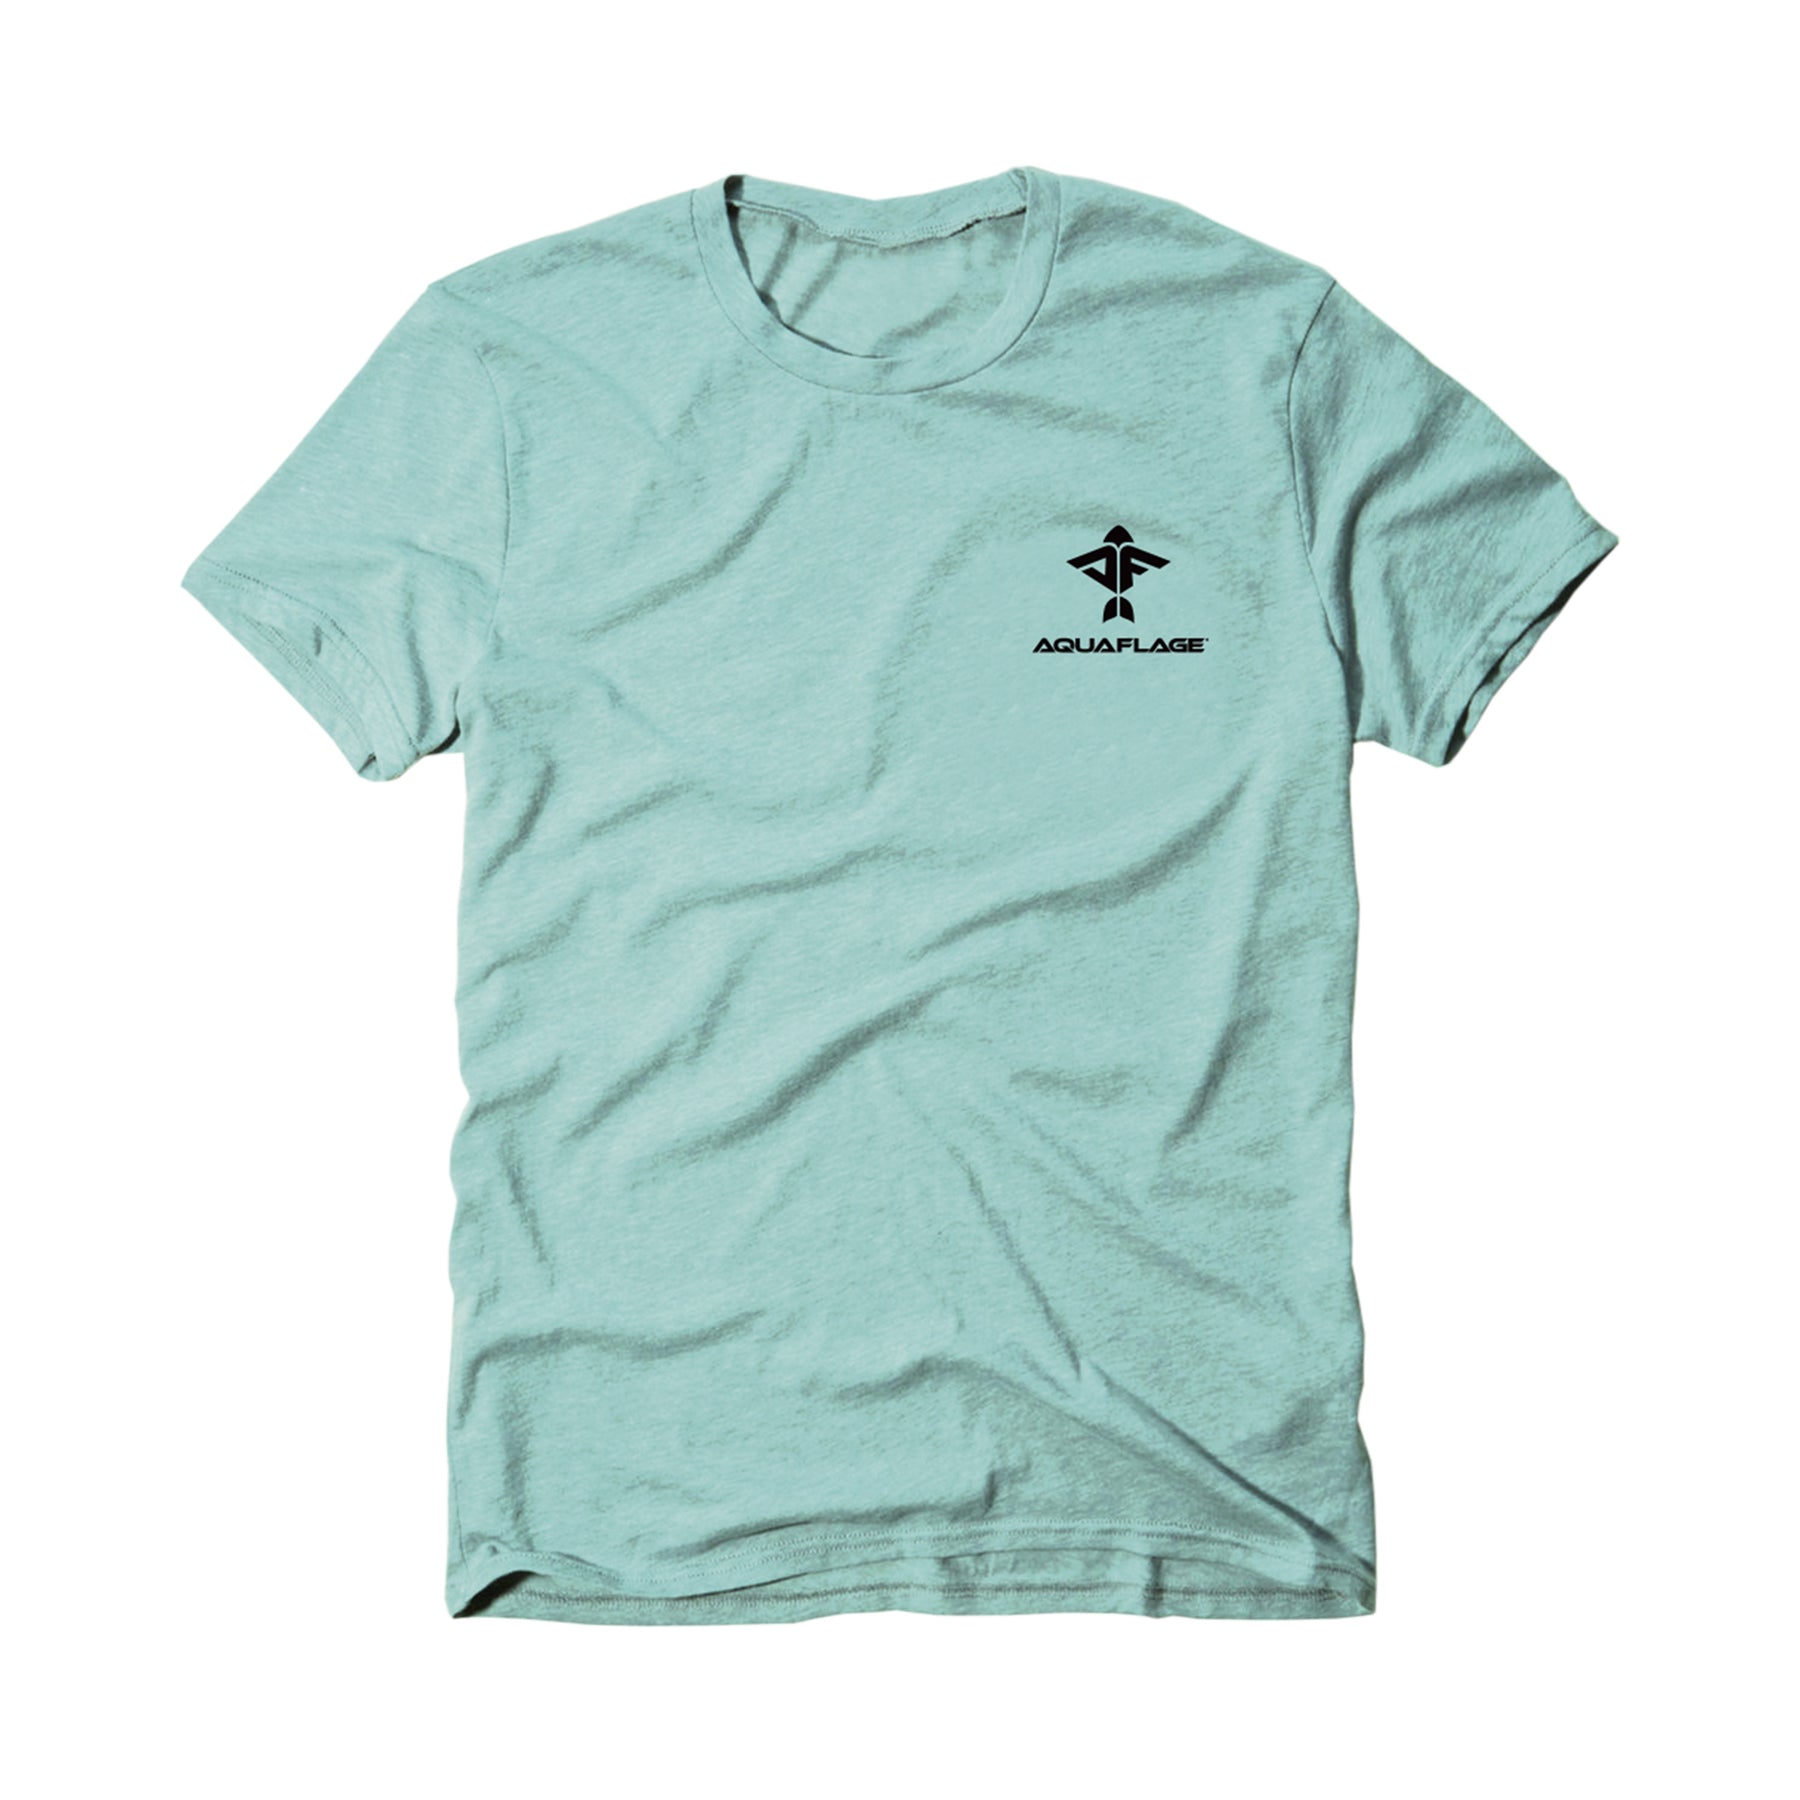 Boating Short Sleeve Mint T-Shirt - Men's – Aquaflage